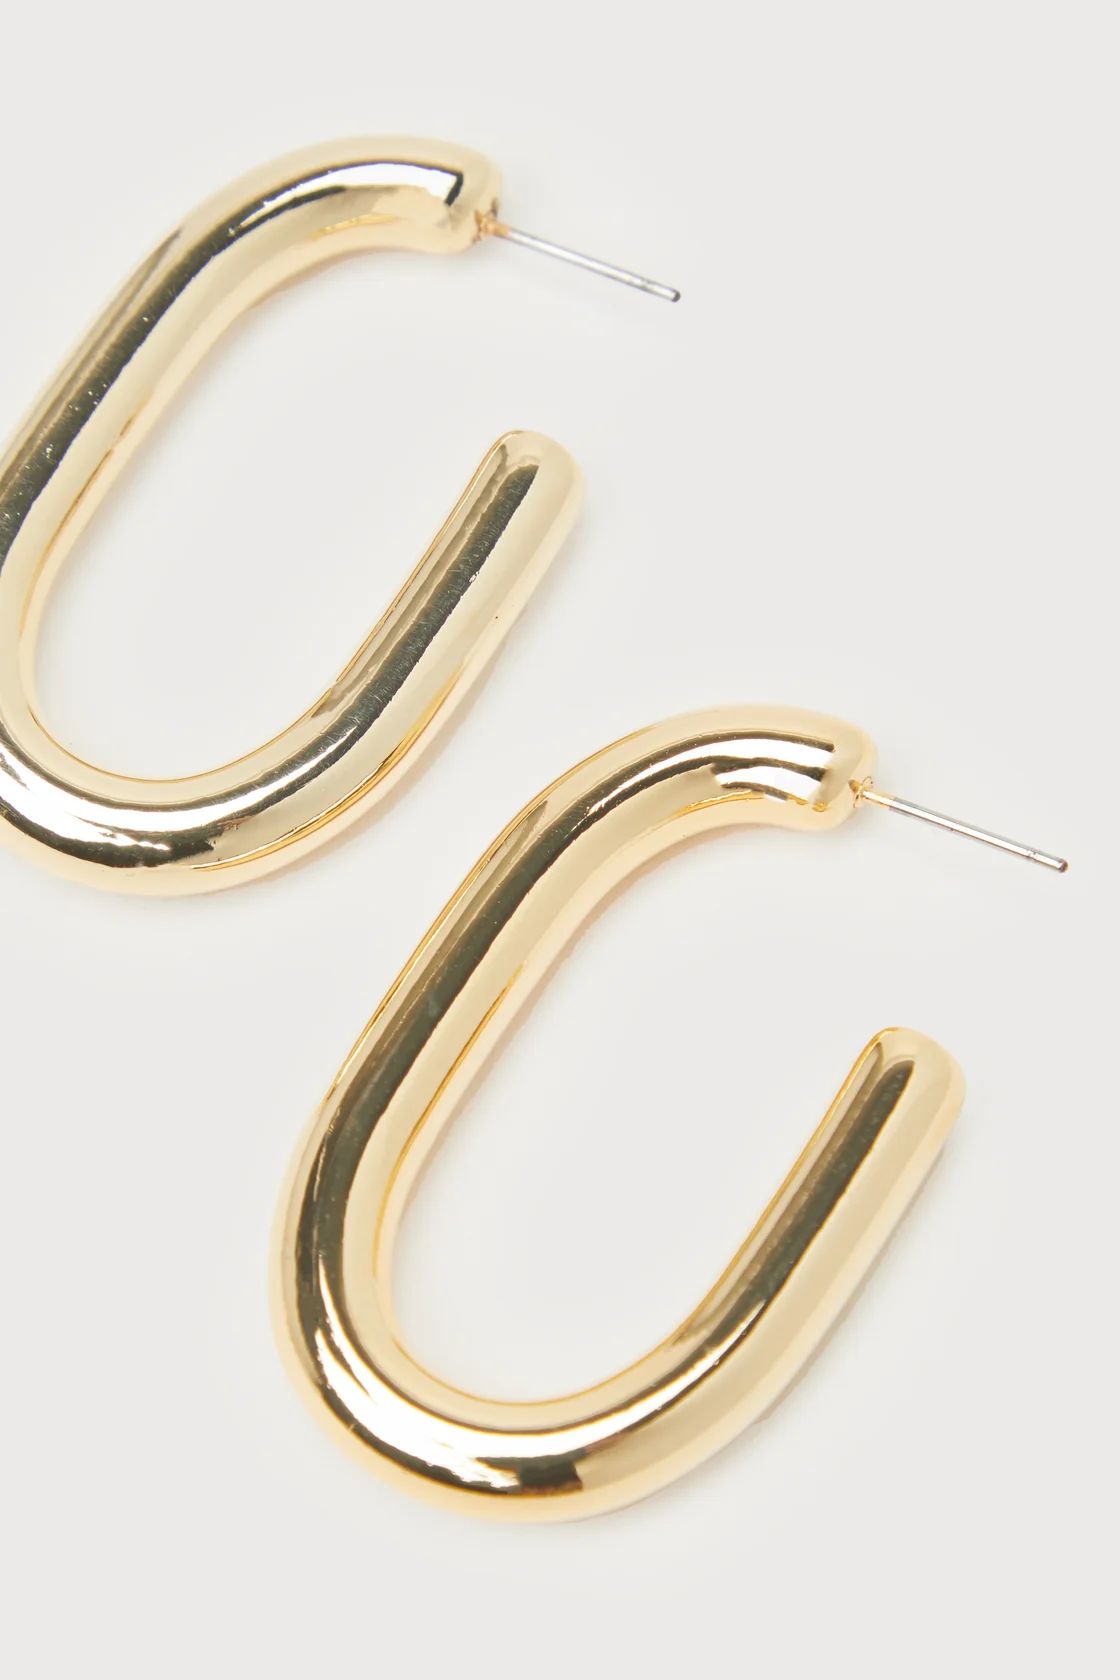 Style in Simplicity Gold Oval Hoop Earrings | Lulus